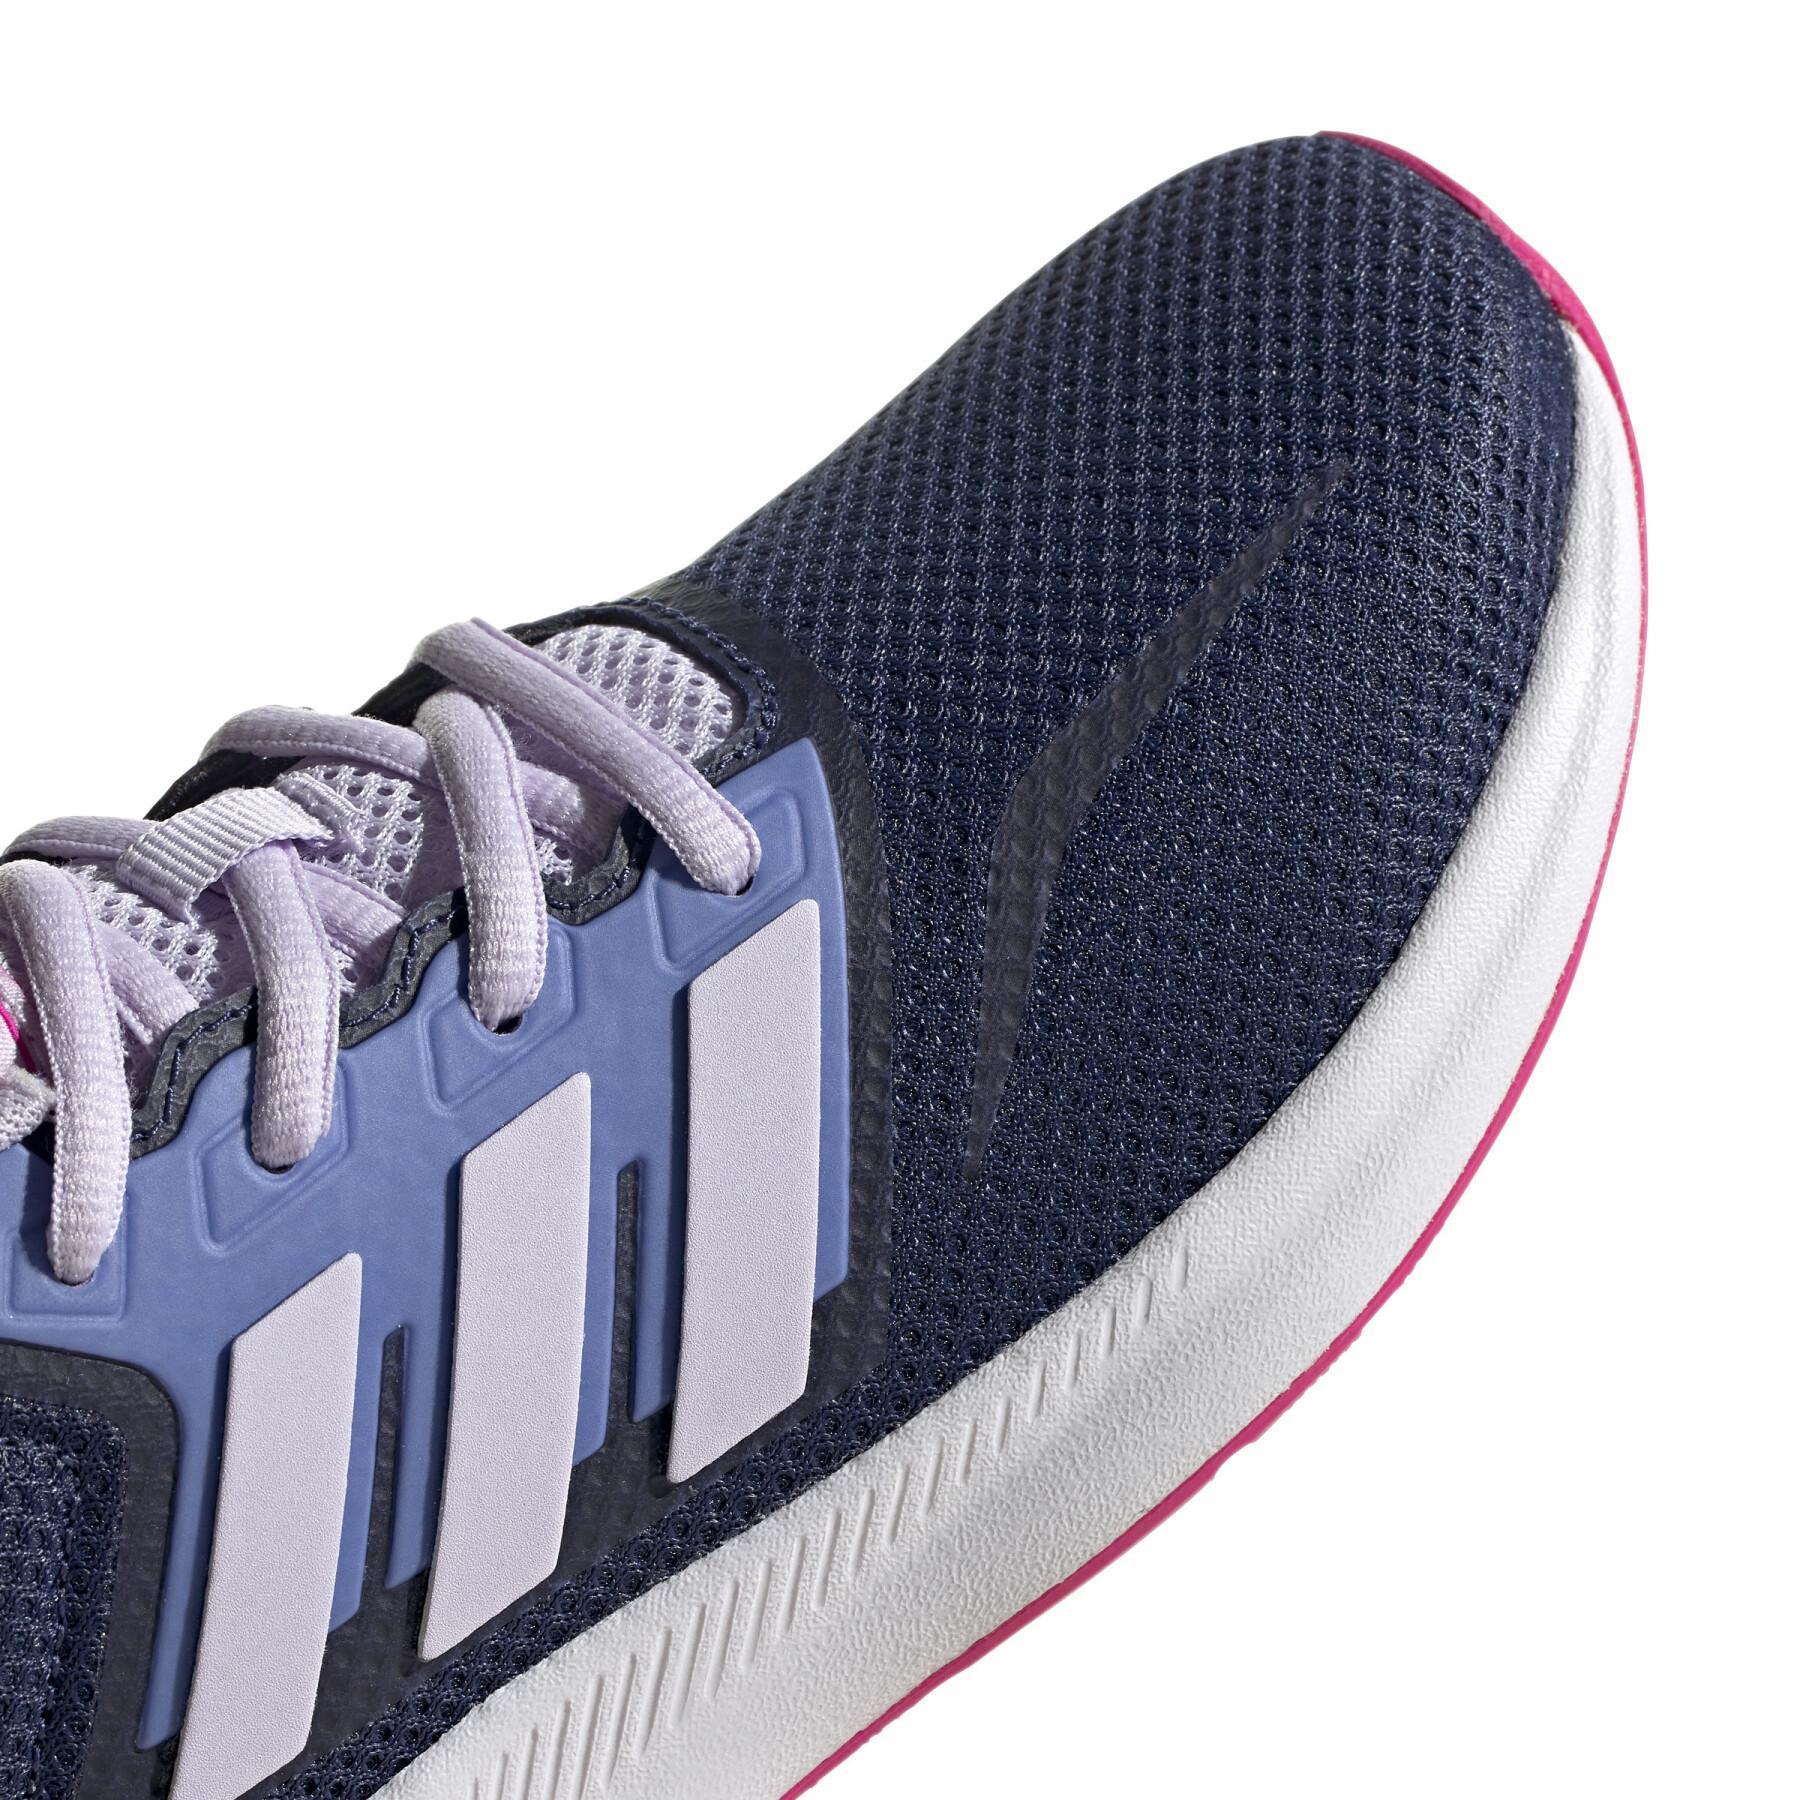 Chaussures de running enfant adidas Runfalcon